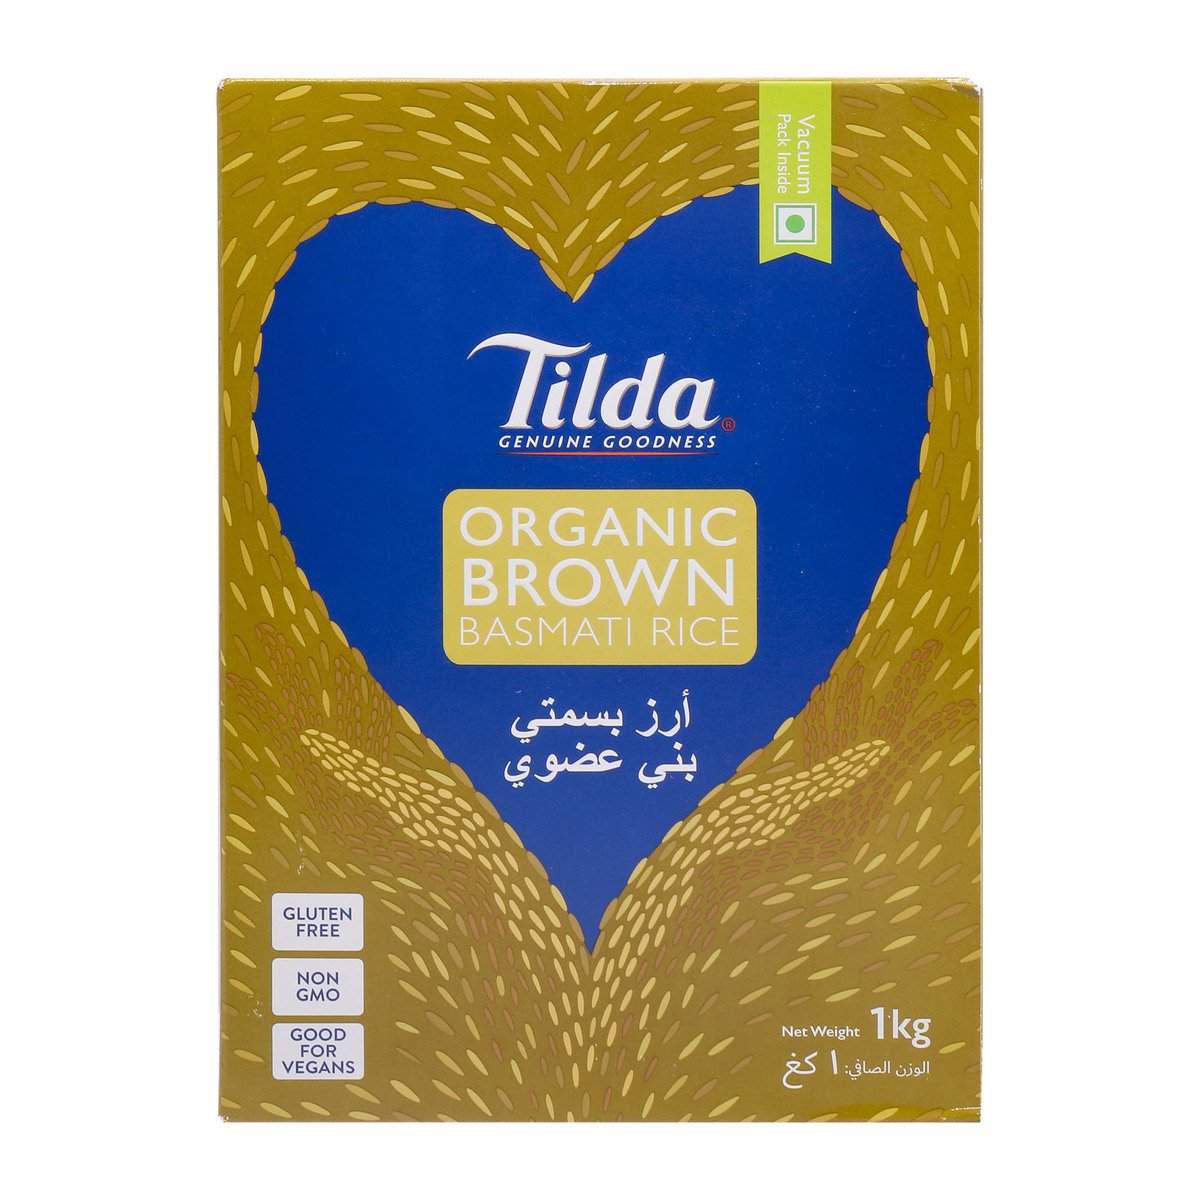 Tilda Organic Brown Basmati Rice 1 kg